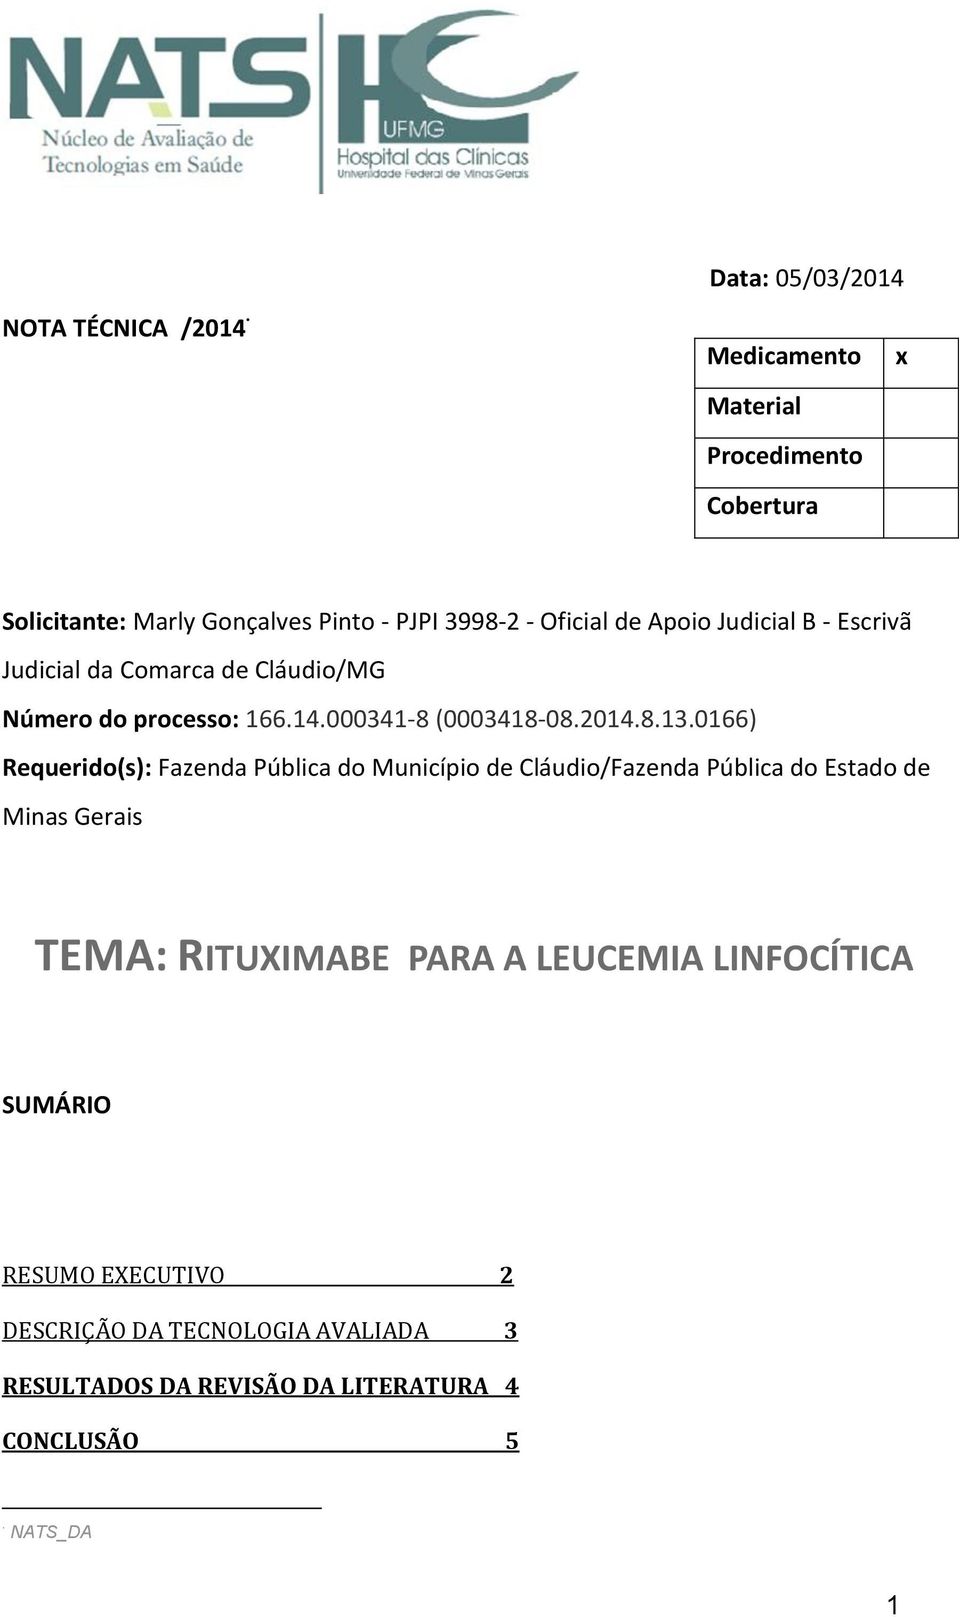 0166) Requerido(s): Fazenda Pública do Município de Cláudio/Fazenda Pública do Estado de Minas Gerais TEMA: RITUXIMABE PARA A